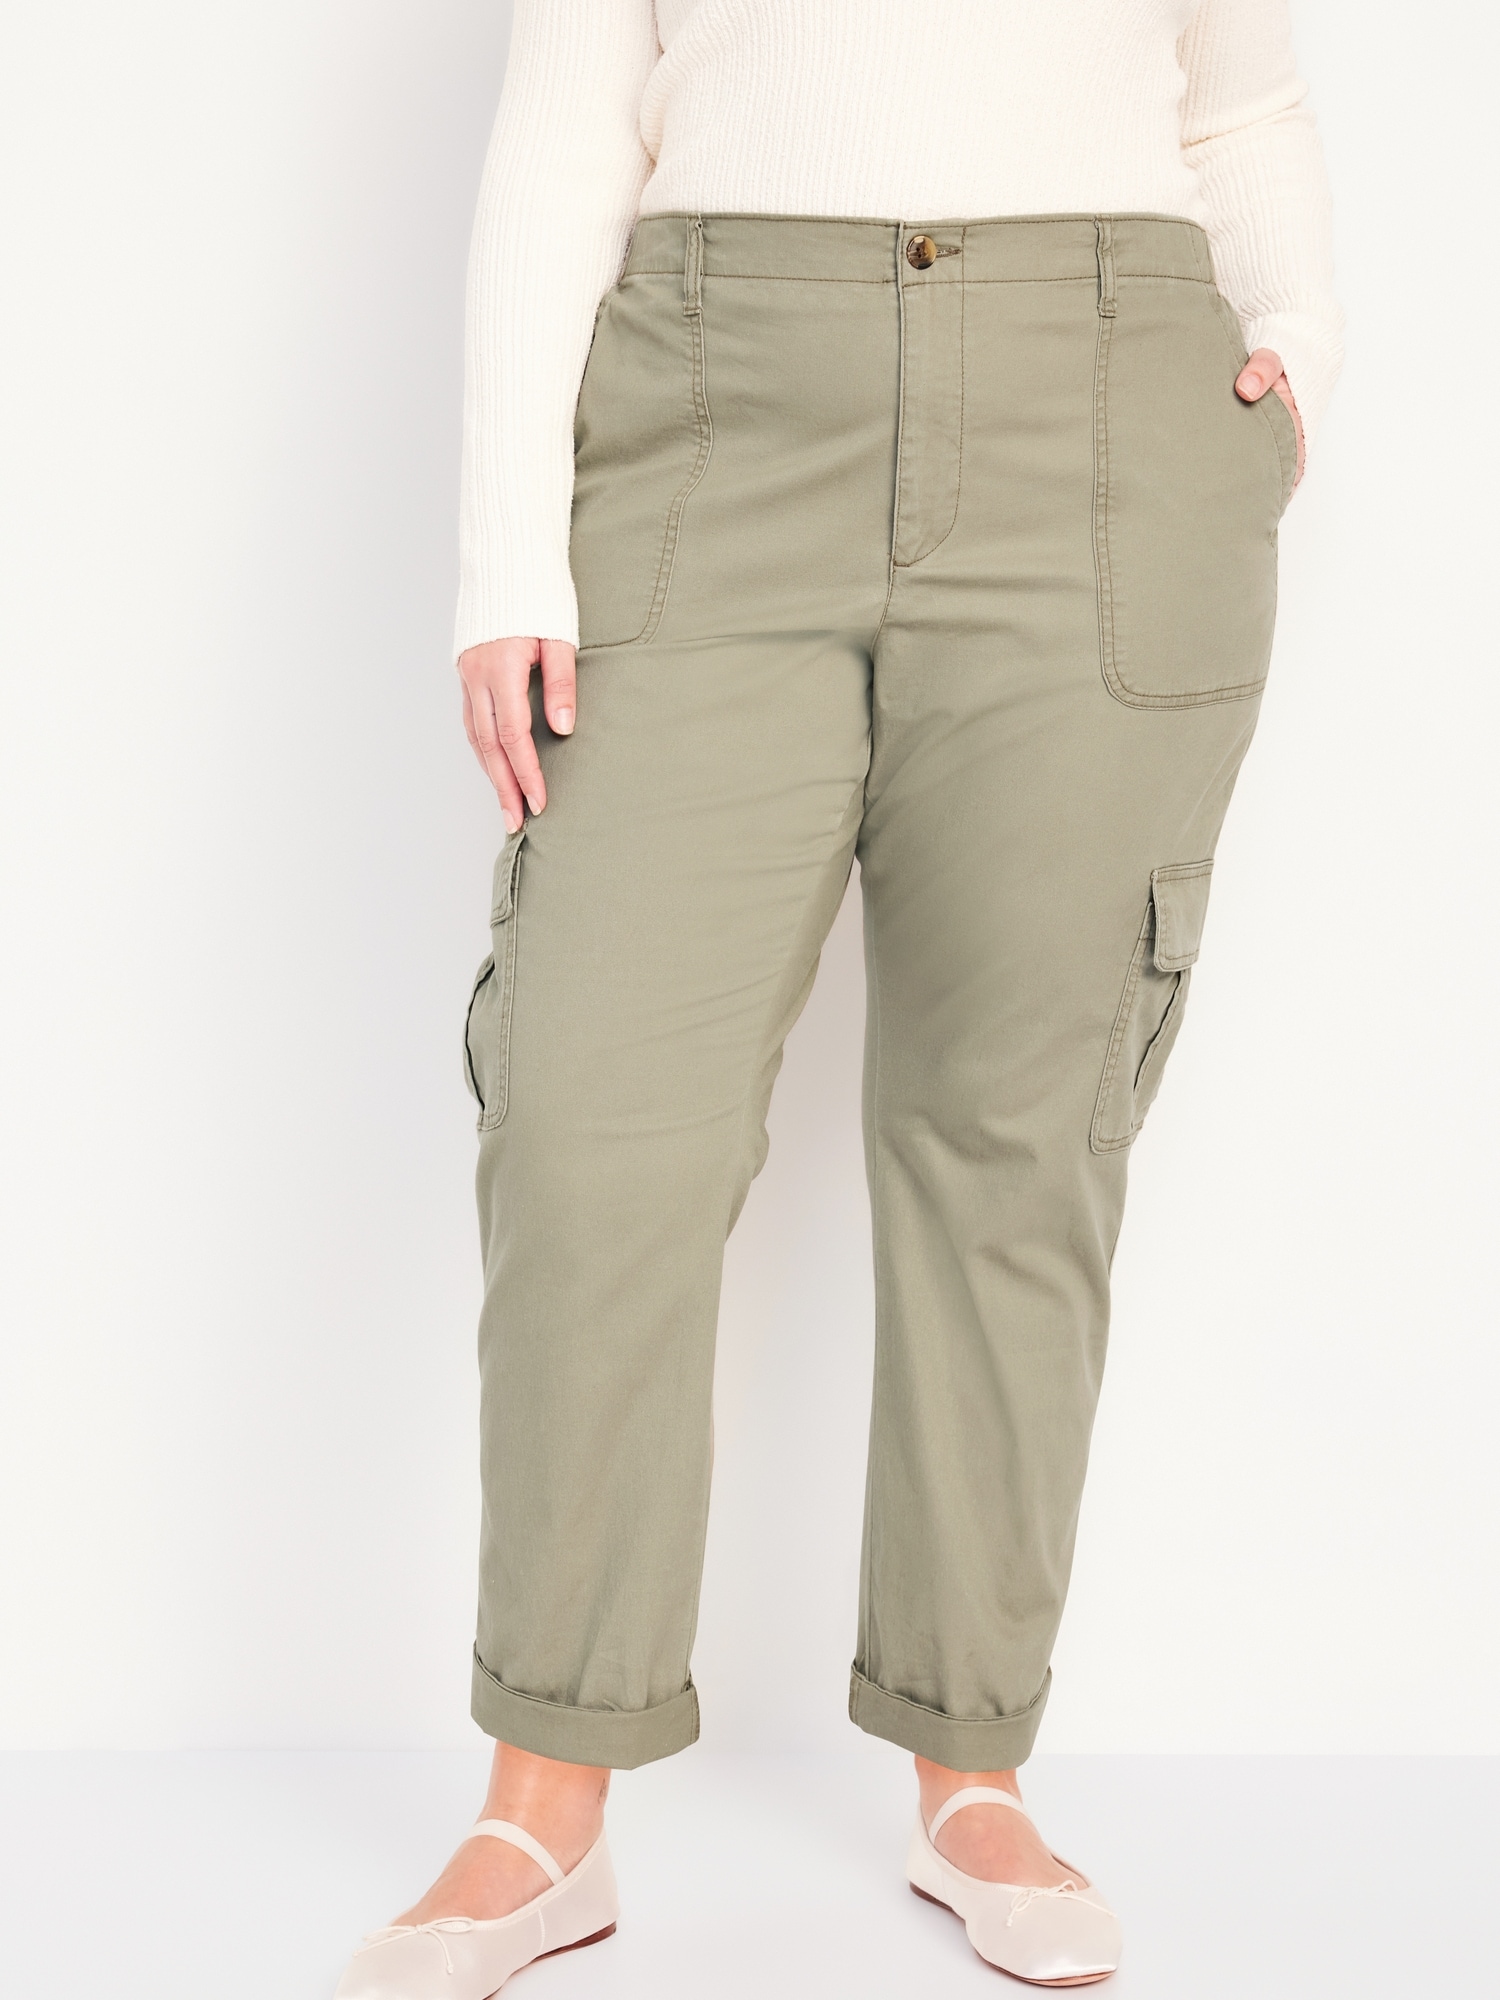 Green Cargo Pants Pocket Design High Waist Button Solid Color